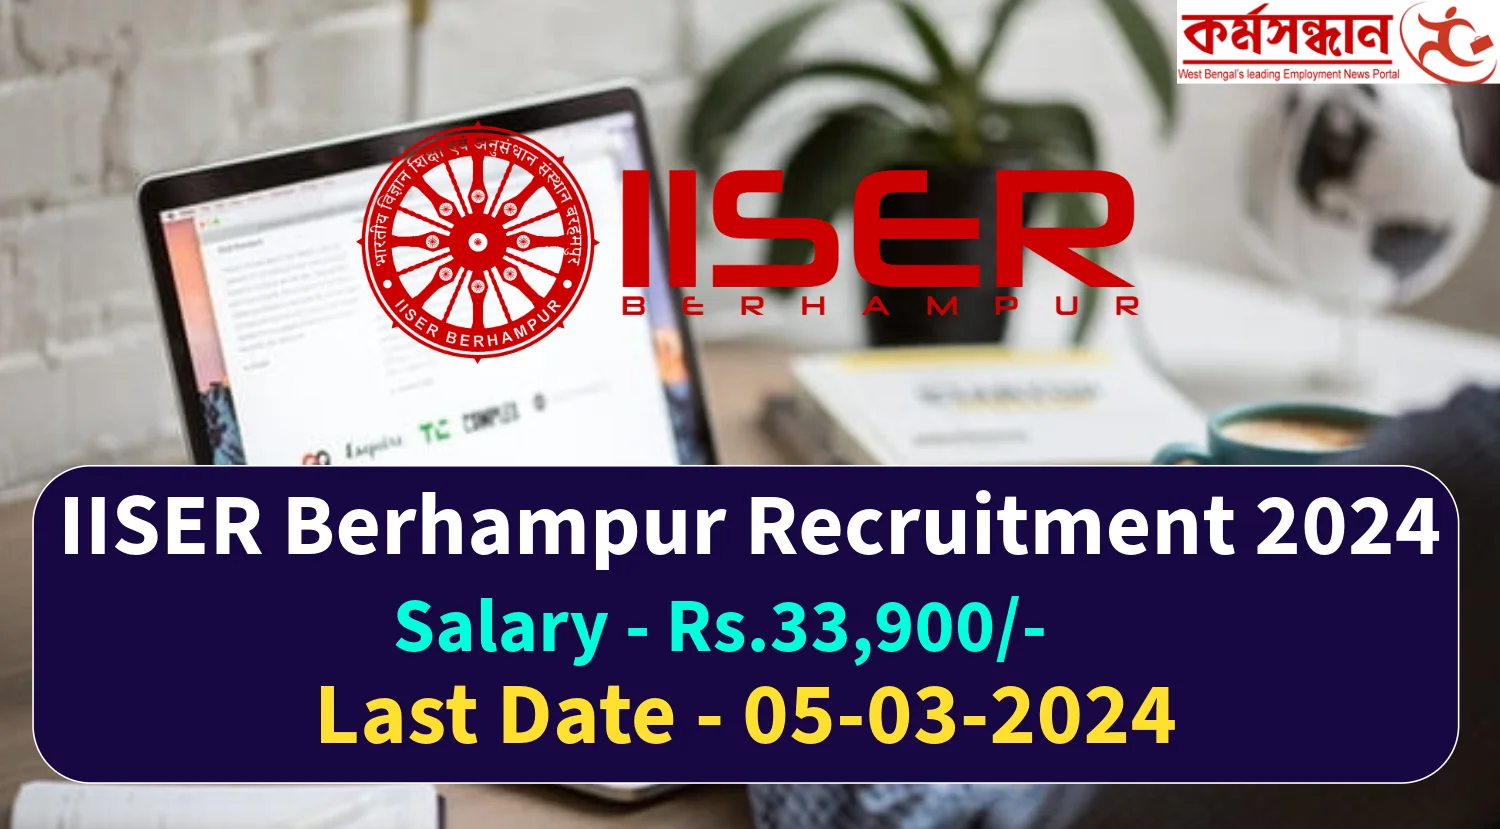 IISER Berhampur Recruitment 2024 for Non-Teaching Posts